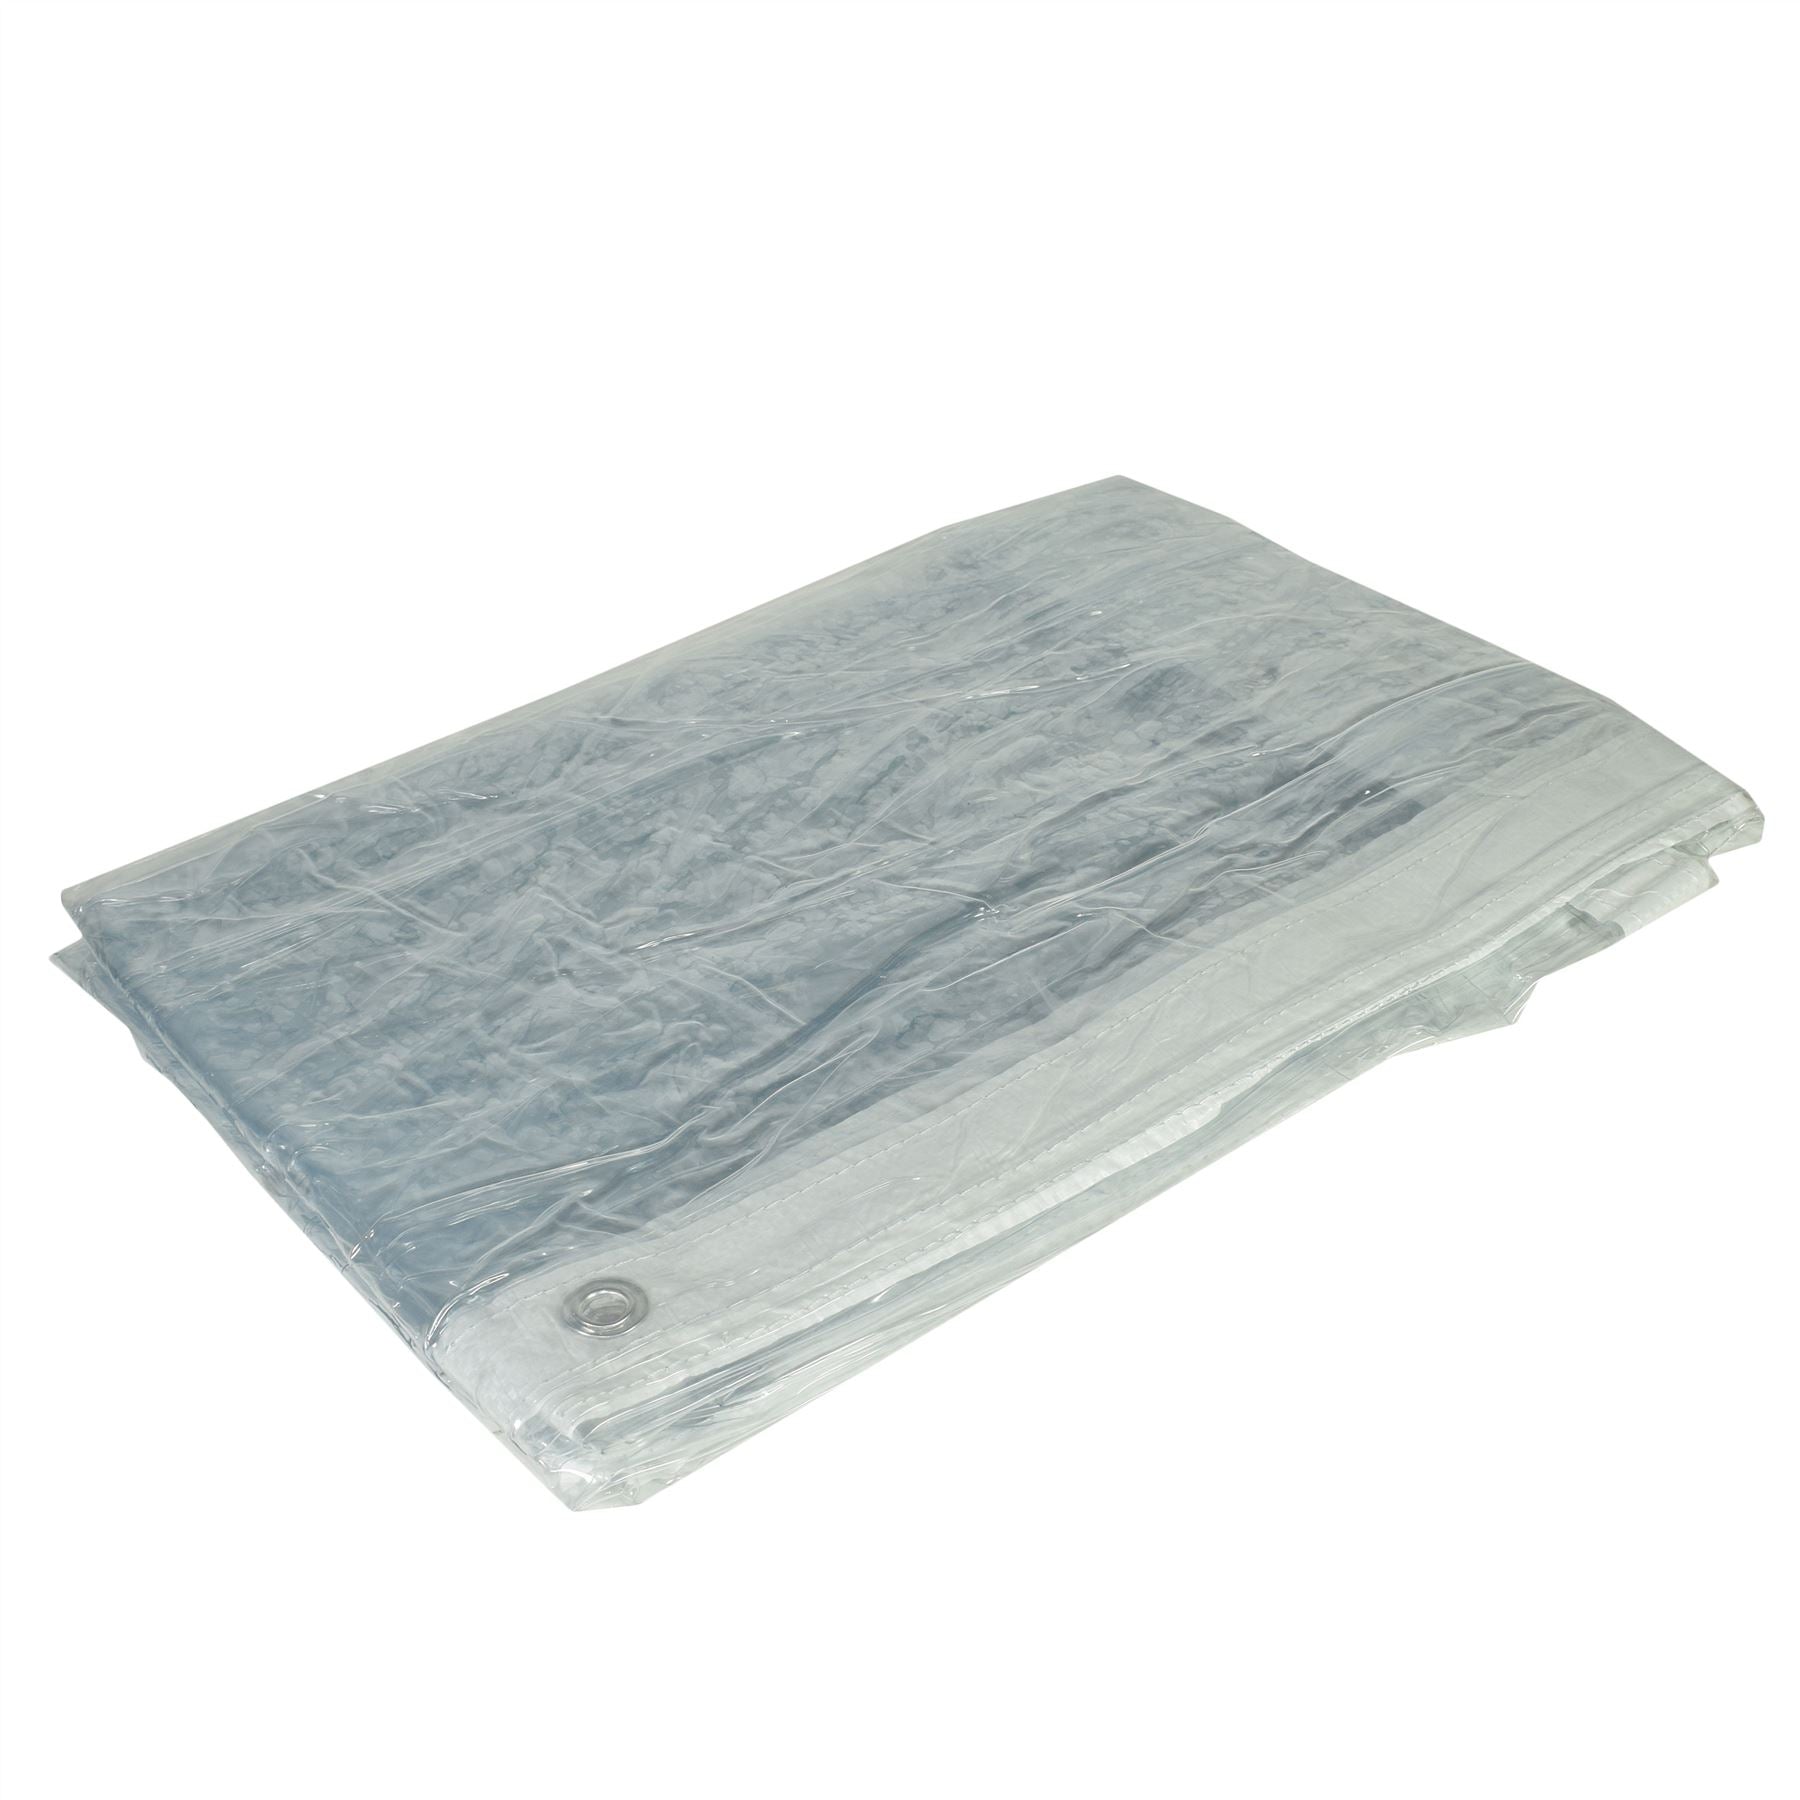 Frosted PVC Tarpaulin Sheet Cover Rain / Waterproof 2m x 3m Market Stalls